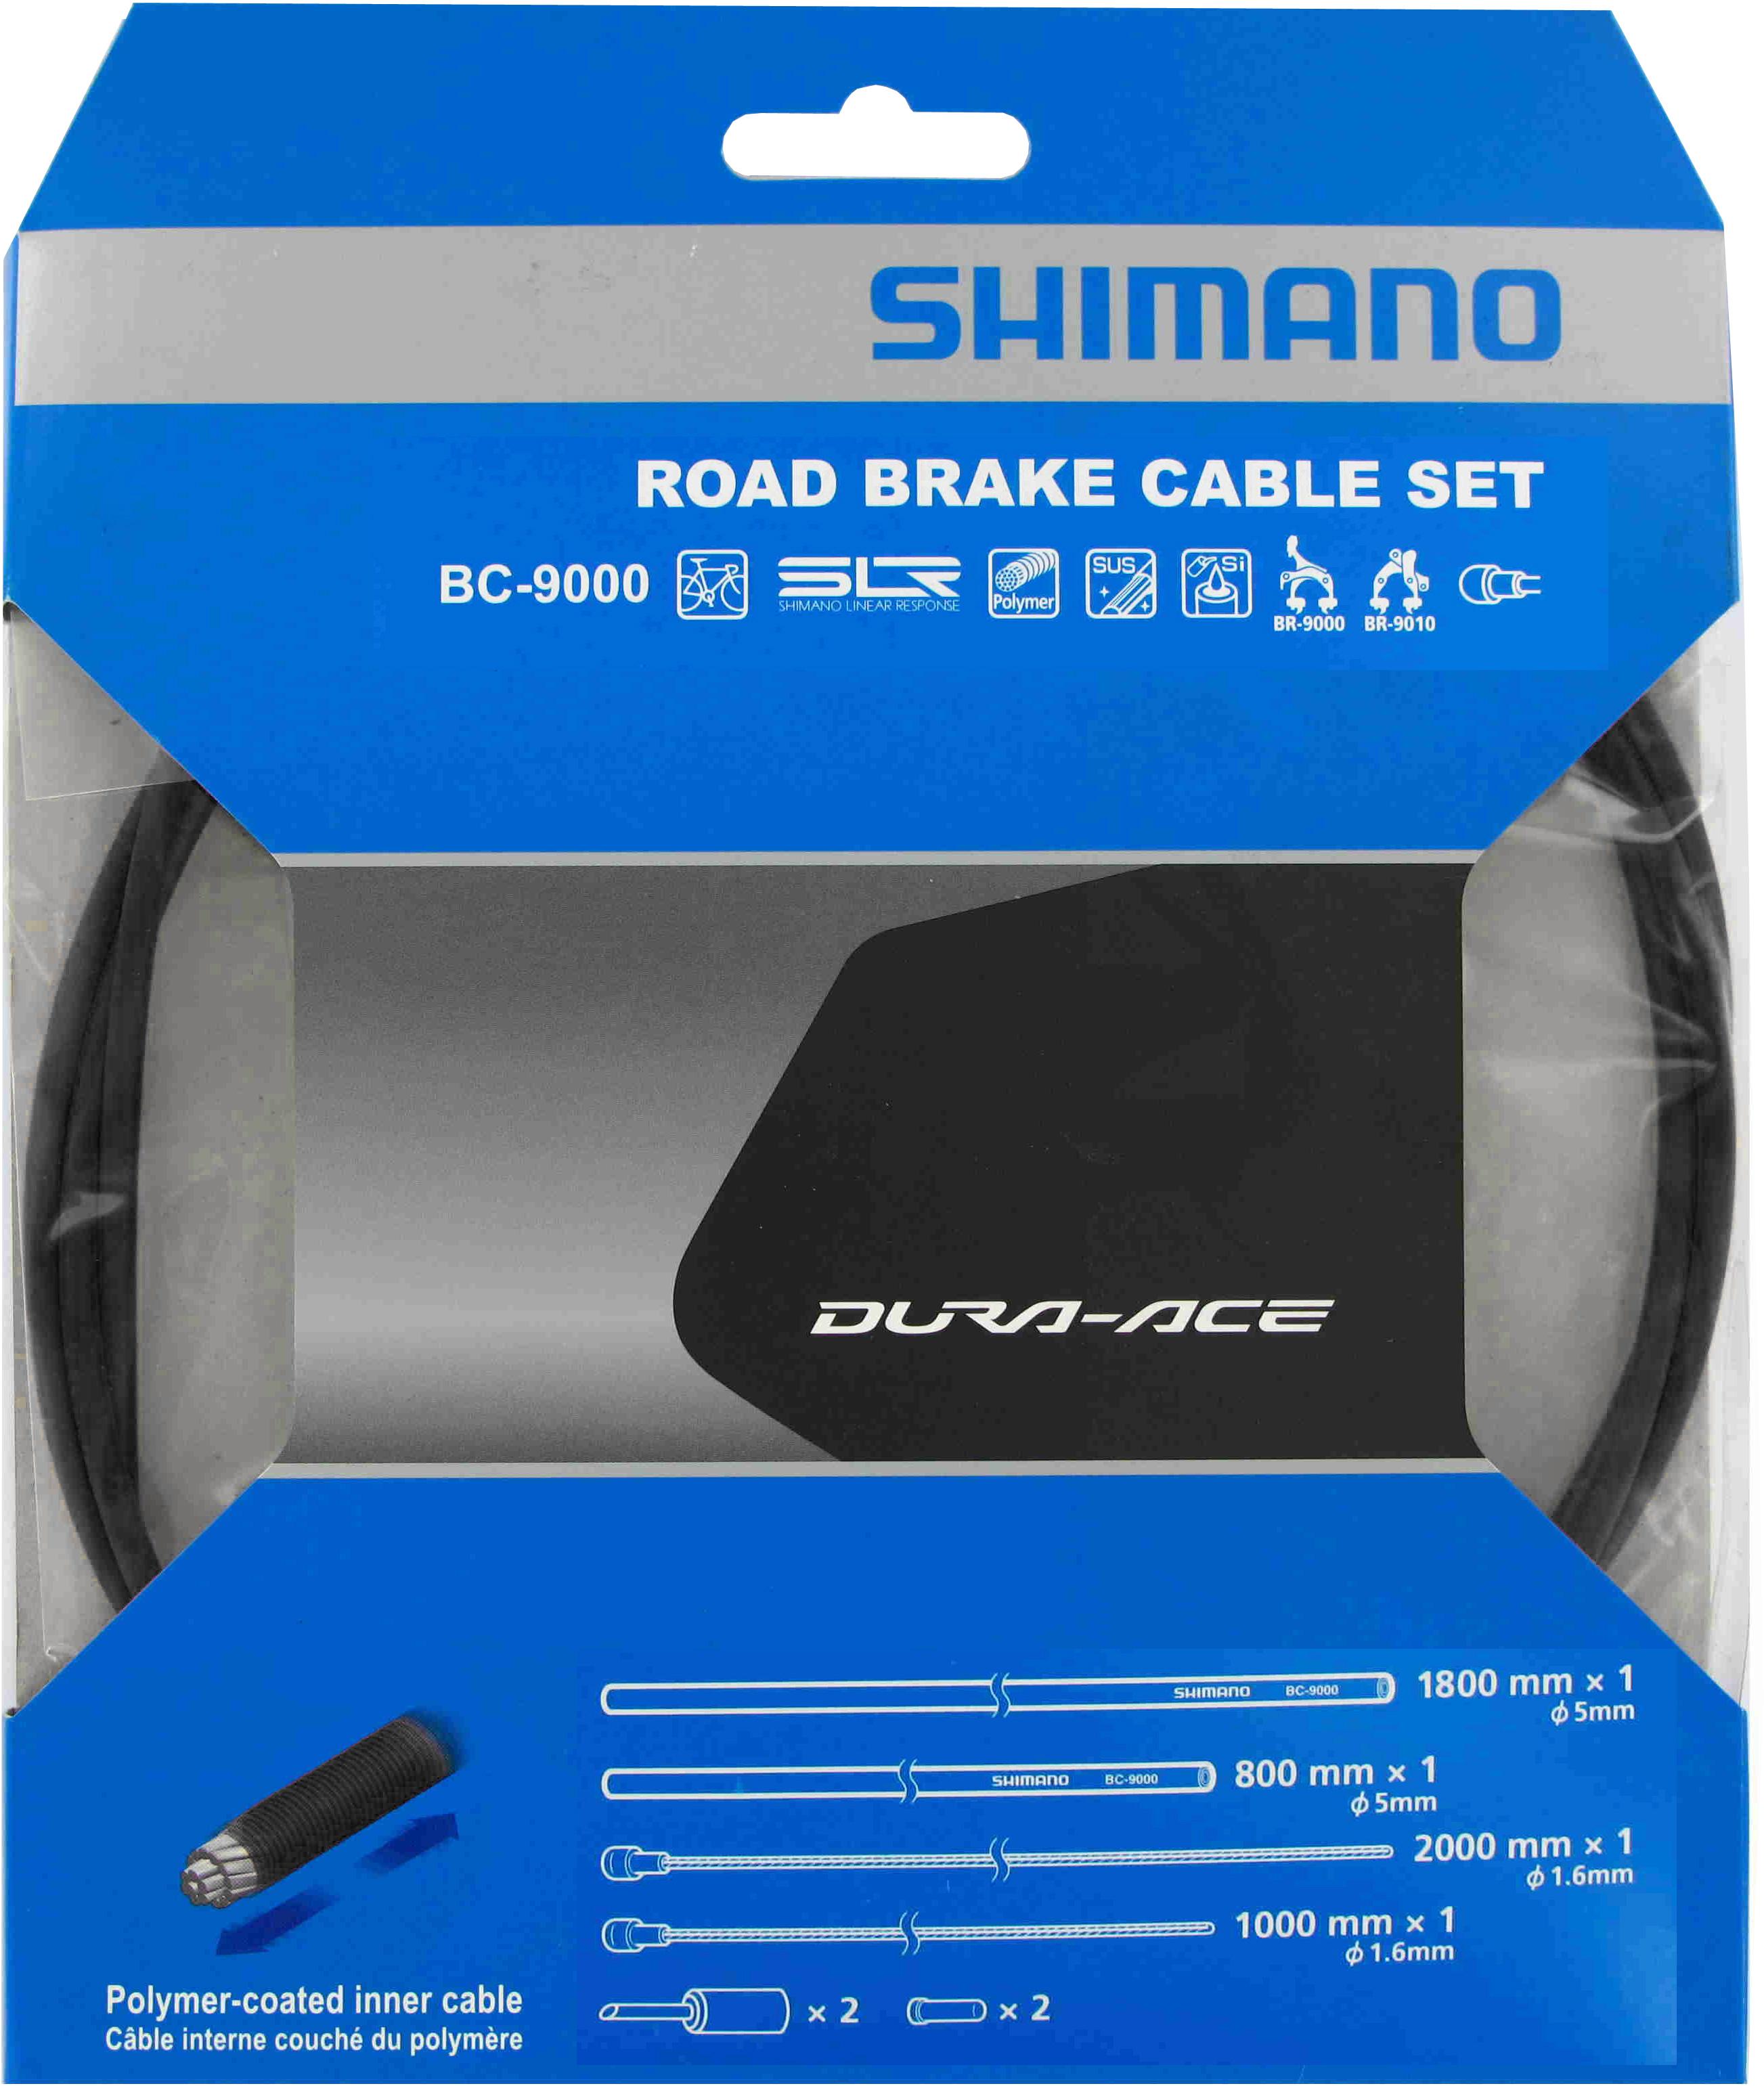 Shimano Dura-ace 9000 Road Brake Cable Set - Black